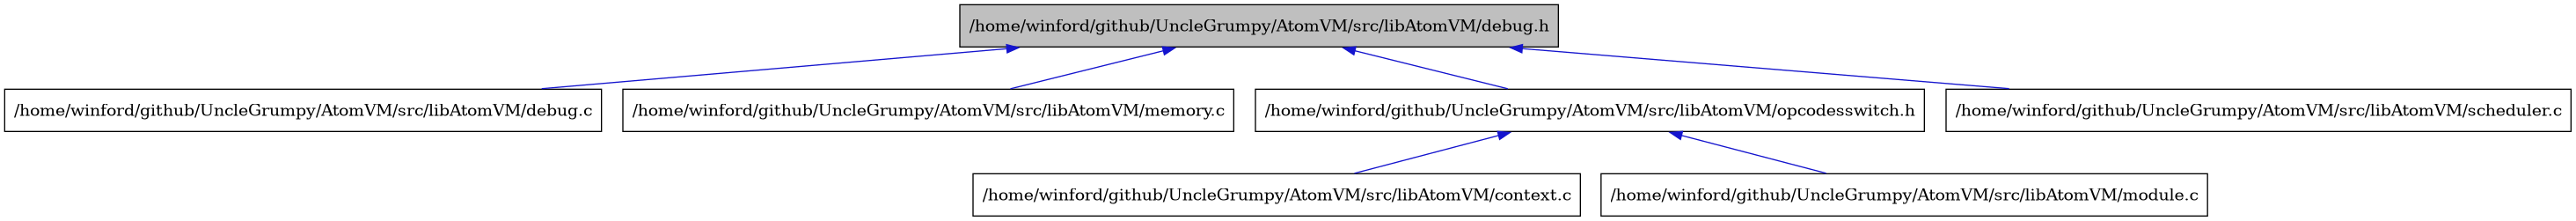 digraph {
    graph [bgcolor="#00000000"]
    node [shape=rectangle style=filled fillcolor="#FFFFFF" font=Helvetica padding=2]
    edge [color="#1414CE"]
    "5" [label="/home/winford/github/UncleGrumpy/AtomVM/src/libAtomVM/context.c" tooltip="/home/winford/github/UncleGrumpy/AtomVM/src/libAtomVM/context.c"]
    "2" [label="/home/winford/github/UncleGrumpy/AtomVM/src/libAtomVM/debug.c" tooltip="/home/winford/github/UncleGrumpy/AtomVM/src/libAtomVM/debug.c"]
    "1" [label="/home/winford/github/UncleGrumpy/AtomVM/src/libAtomVM/debug.h" tooltip="/home/winford/github/UncleGrumpy/AtomVM/src/libAtomVM/debug.h" fillcolor="#BFBFBF"]
    "3" [label="/home/winford/github/UncleGrumpy/AtomVM/src/libAtomVM/memory.c" tooltip="/home/winford/github/UncleGrumpy/AtomVM/src/libAtomVM/memory.c"]
    "6" [label="/home/winford/github/UncleGrumpy/AtomVM/src/libAtomVM/module.c" tooltip="/home/winford/github/UncleGrumpy/AtomVM/src/libAtomVM/module.c"]
    "4" [label="/home/winford/github/UncleGrumpy/AtomVM/src/libAtomVM/opcodesswitch.h" tooltip="/home/winford/github/UncleGrumpy/AtomVM/src/libAtomVM/opcodesswitch.h"]
    "7" [label="/home/winford/github/UncleGrumpy/AtomVM/src/libAtomVM/scheduler.c" tooltip="/home/winford/github/UncleGrumpy/AtomVM/src/libAtomVM/scheduler.c"]
    "1" -> "2" [dir=back tooltip="include"]
    "1" -> "3" [dir=back tooltip="include"]
    "1" -> "4" [dir=back tooltip="include"]
    "1" -> "7" [dir=back tooltip="include"]
    "4" -> "5" [dir=back tooltip="include"]
    "4" -> "6" [dir=back tooltip="include"]
}